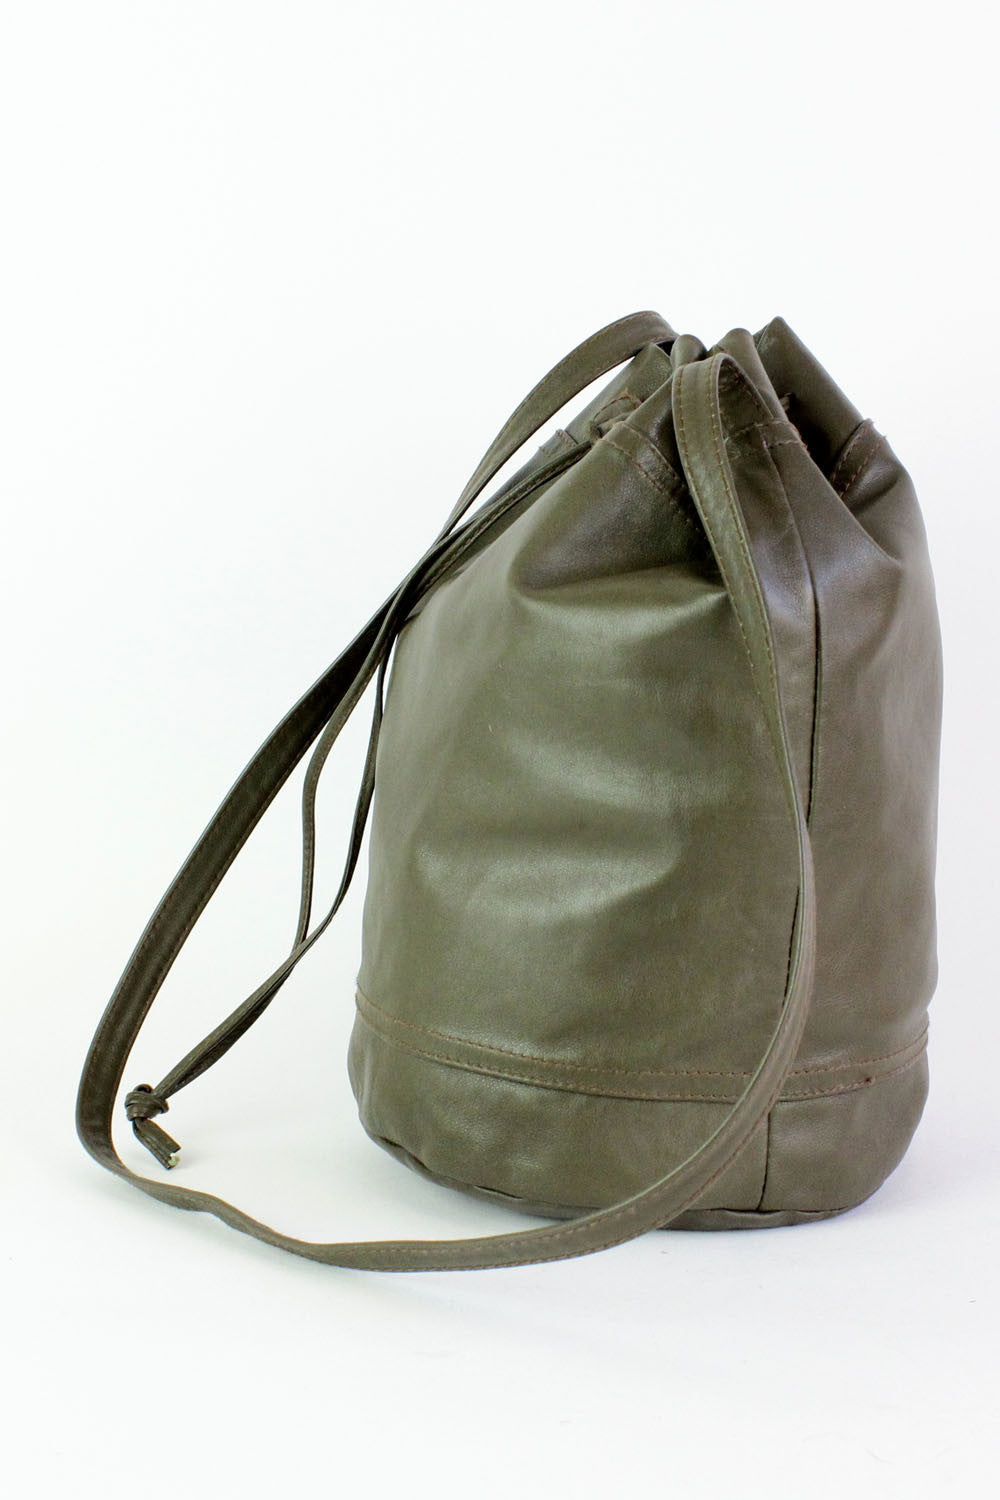 PB0110 - Olive green leather bucket bag AB 103.1 - Schwittenberg